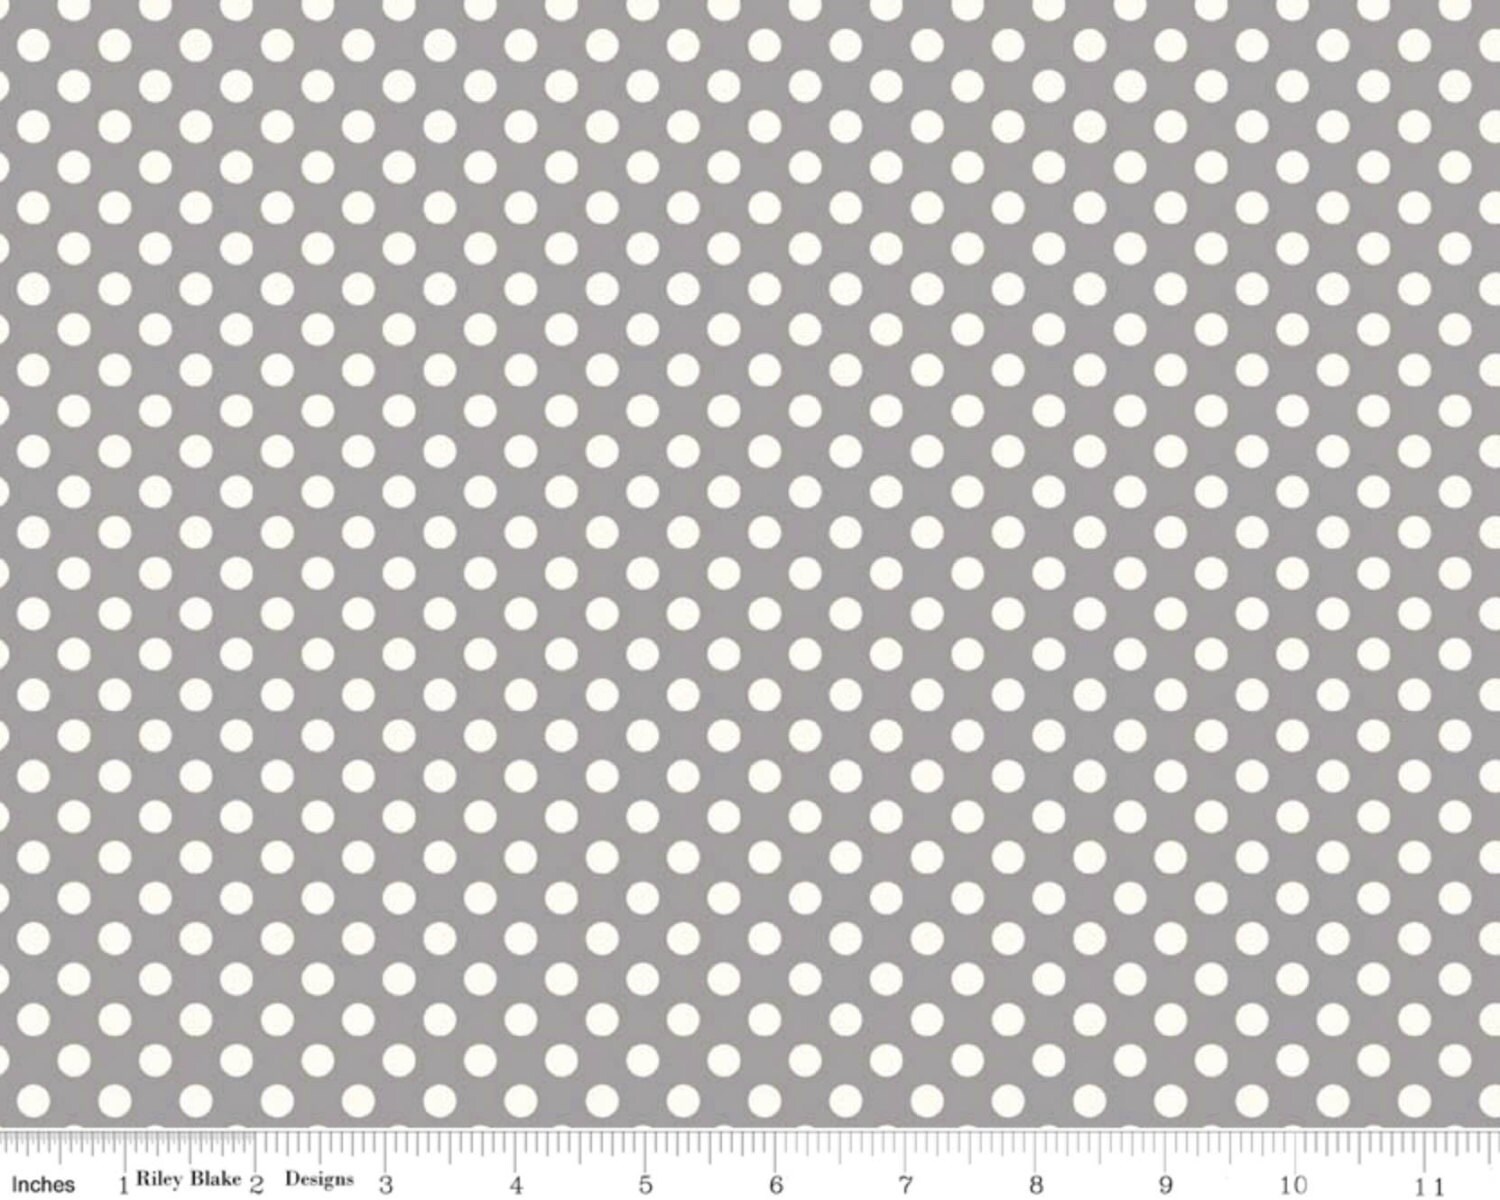 Small Cream Dots Gray Cotton Print Fabric from Riley Blake